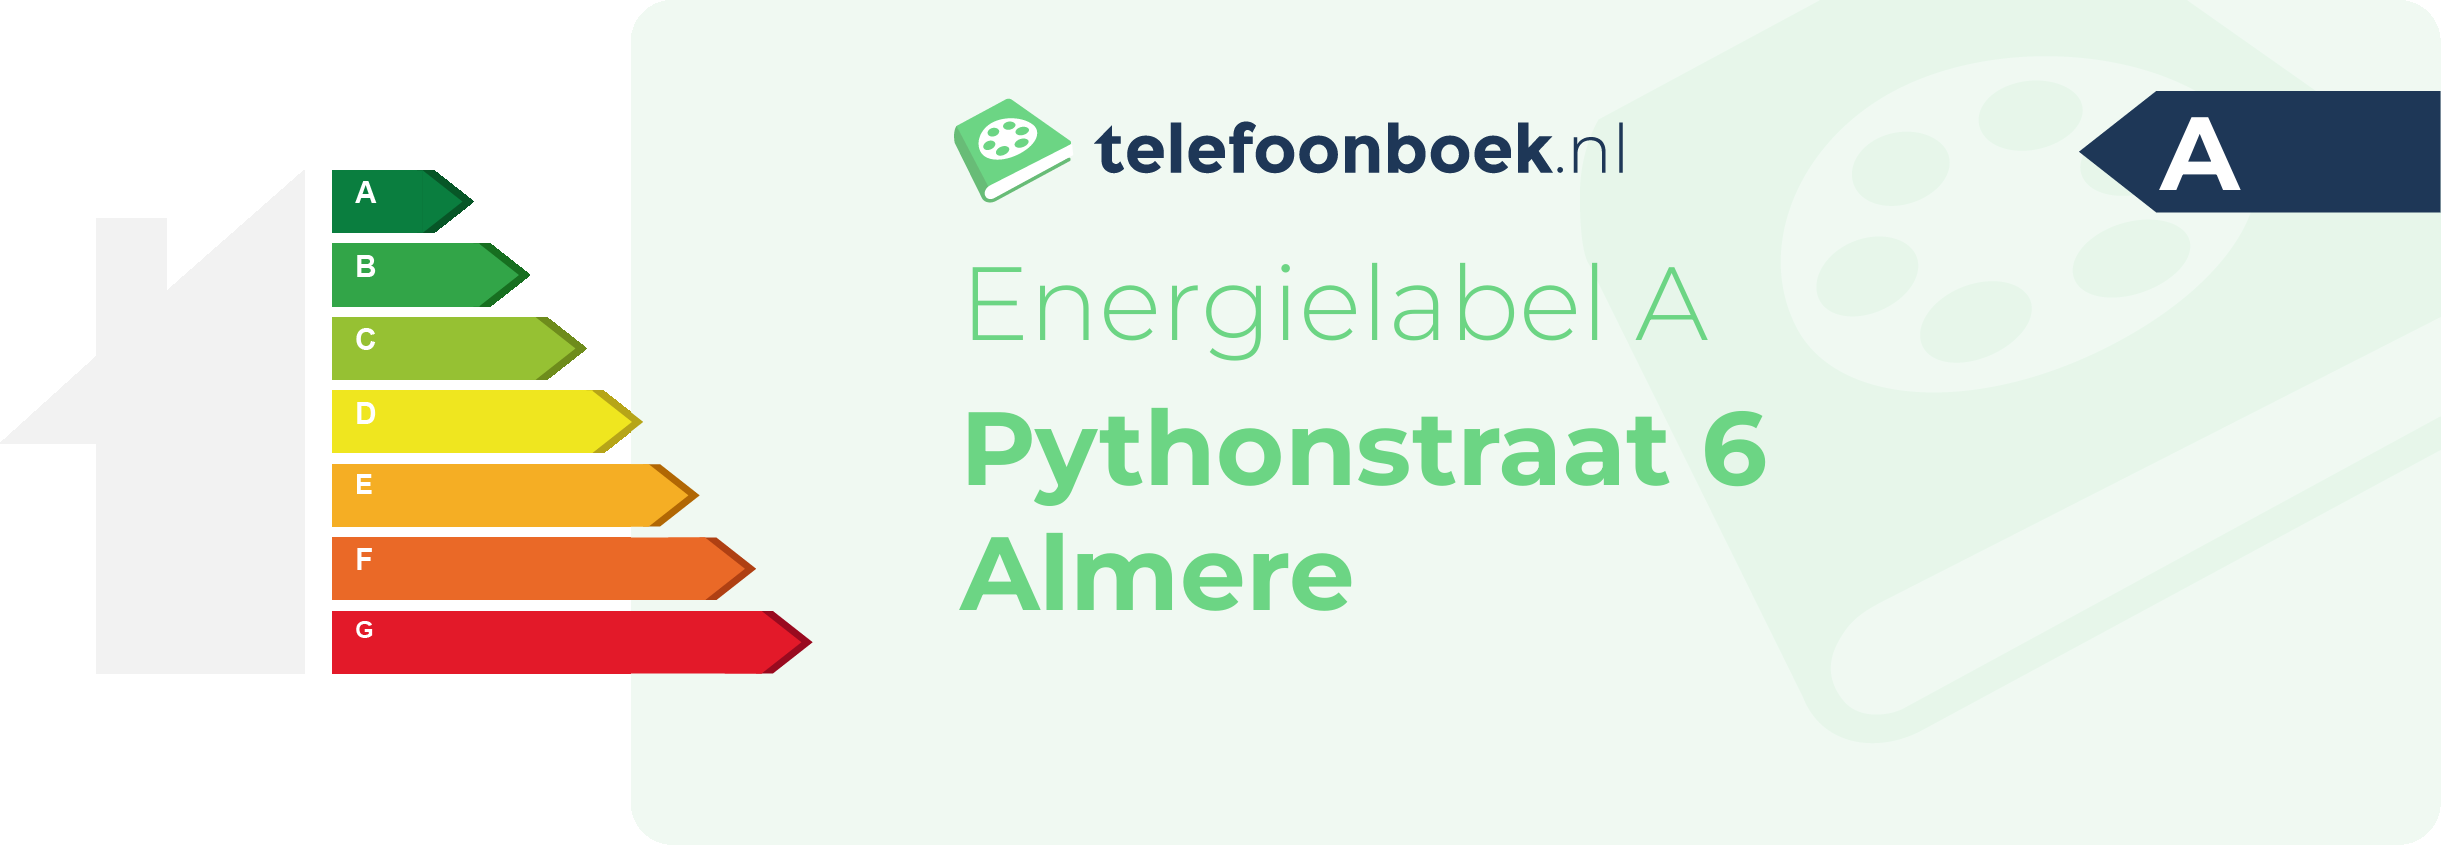 Energielabel Pythonstraat 6 Almere